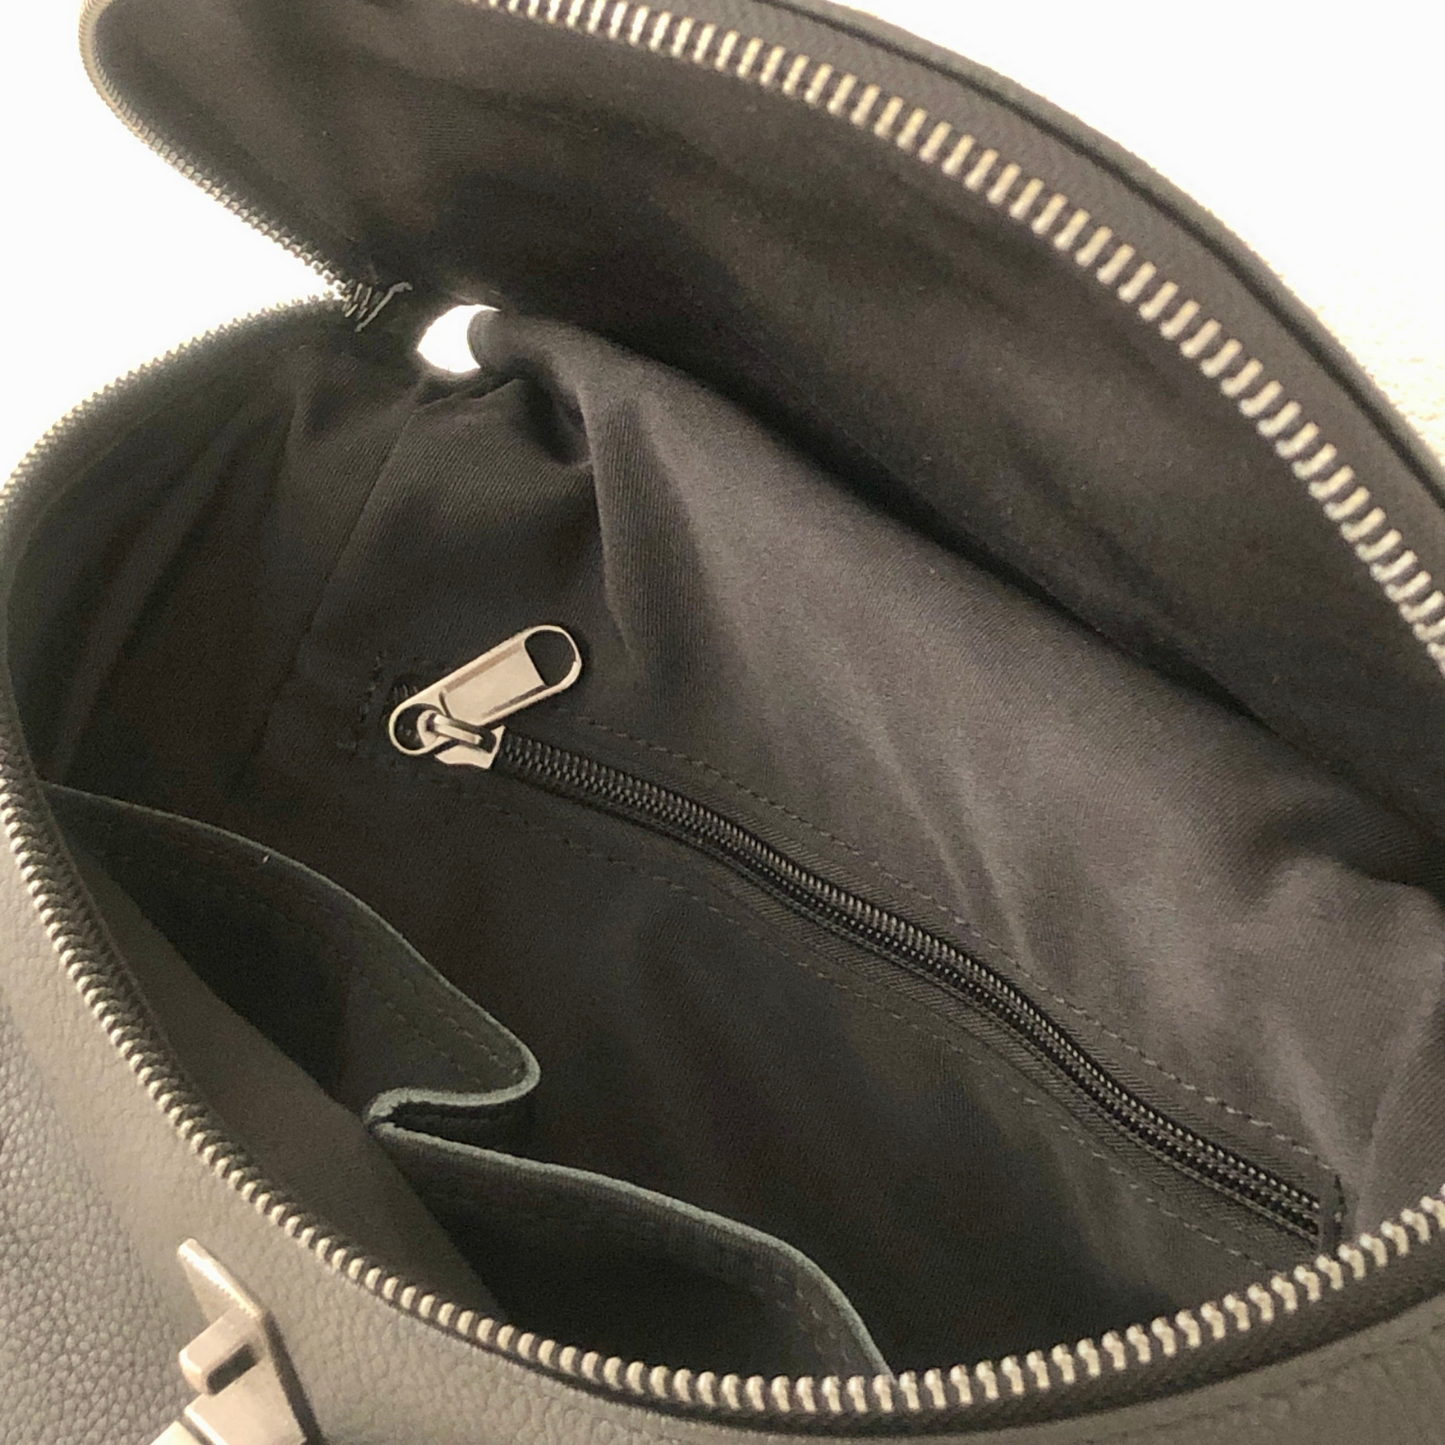 Genuine Leather mini Backpack 2-way convertible shoulder bag female